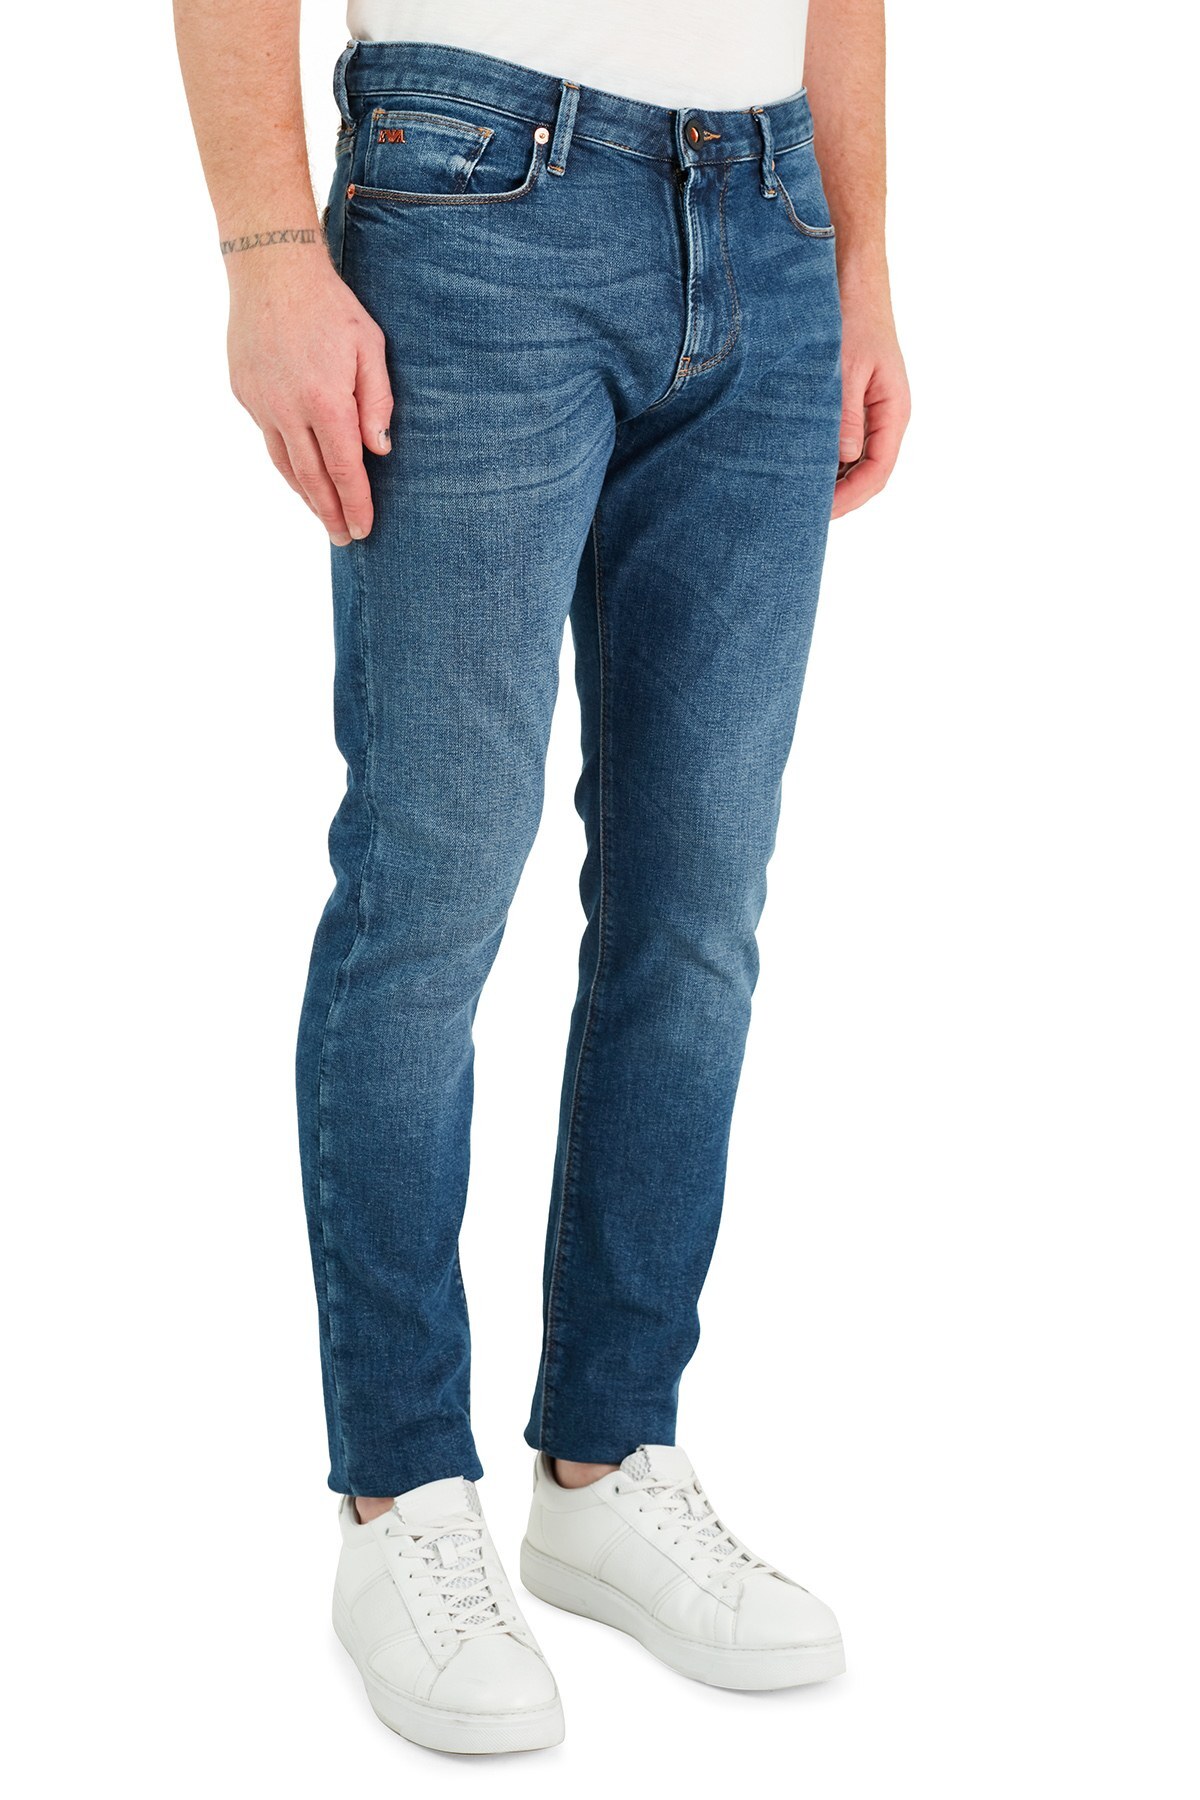 Emporio Armani Slim Fit Pamuklu J06 Jeans Erkek Kot Pantolon 3K1J06 1DY0Z 0942 LACİVERT